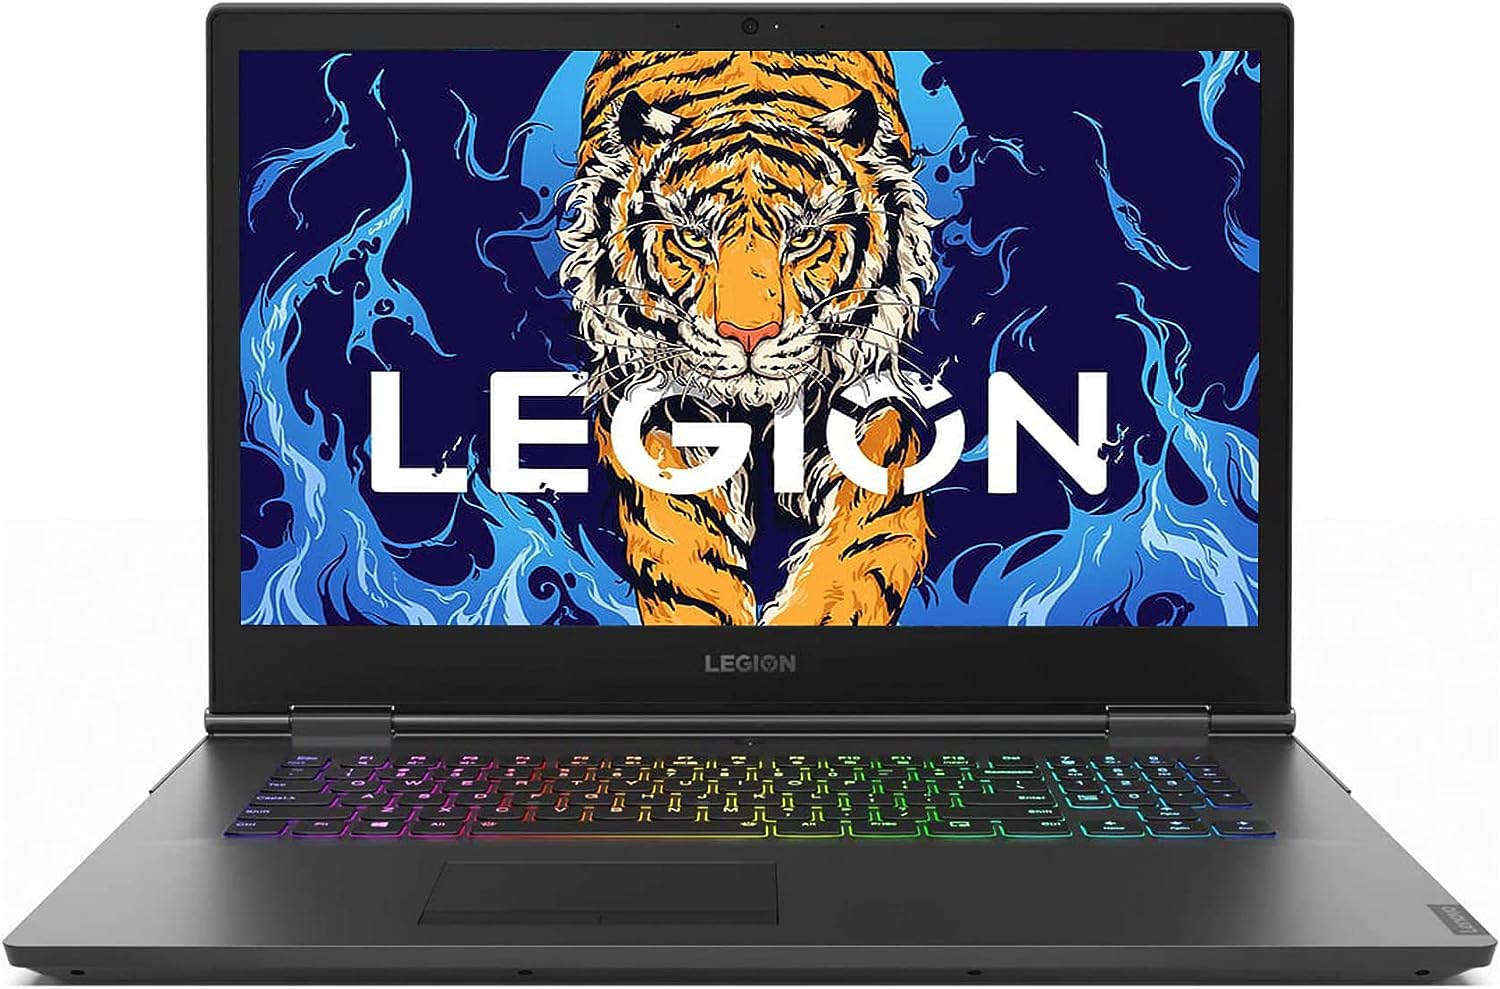 649243b0a8f57e0dcb53a341 lenovo legion ultimate gaming laptop